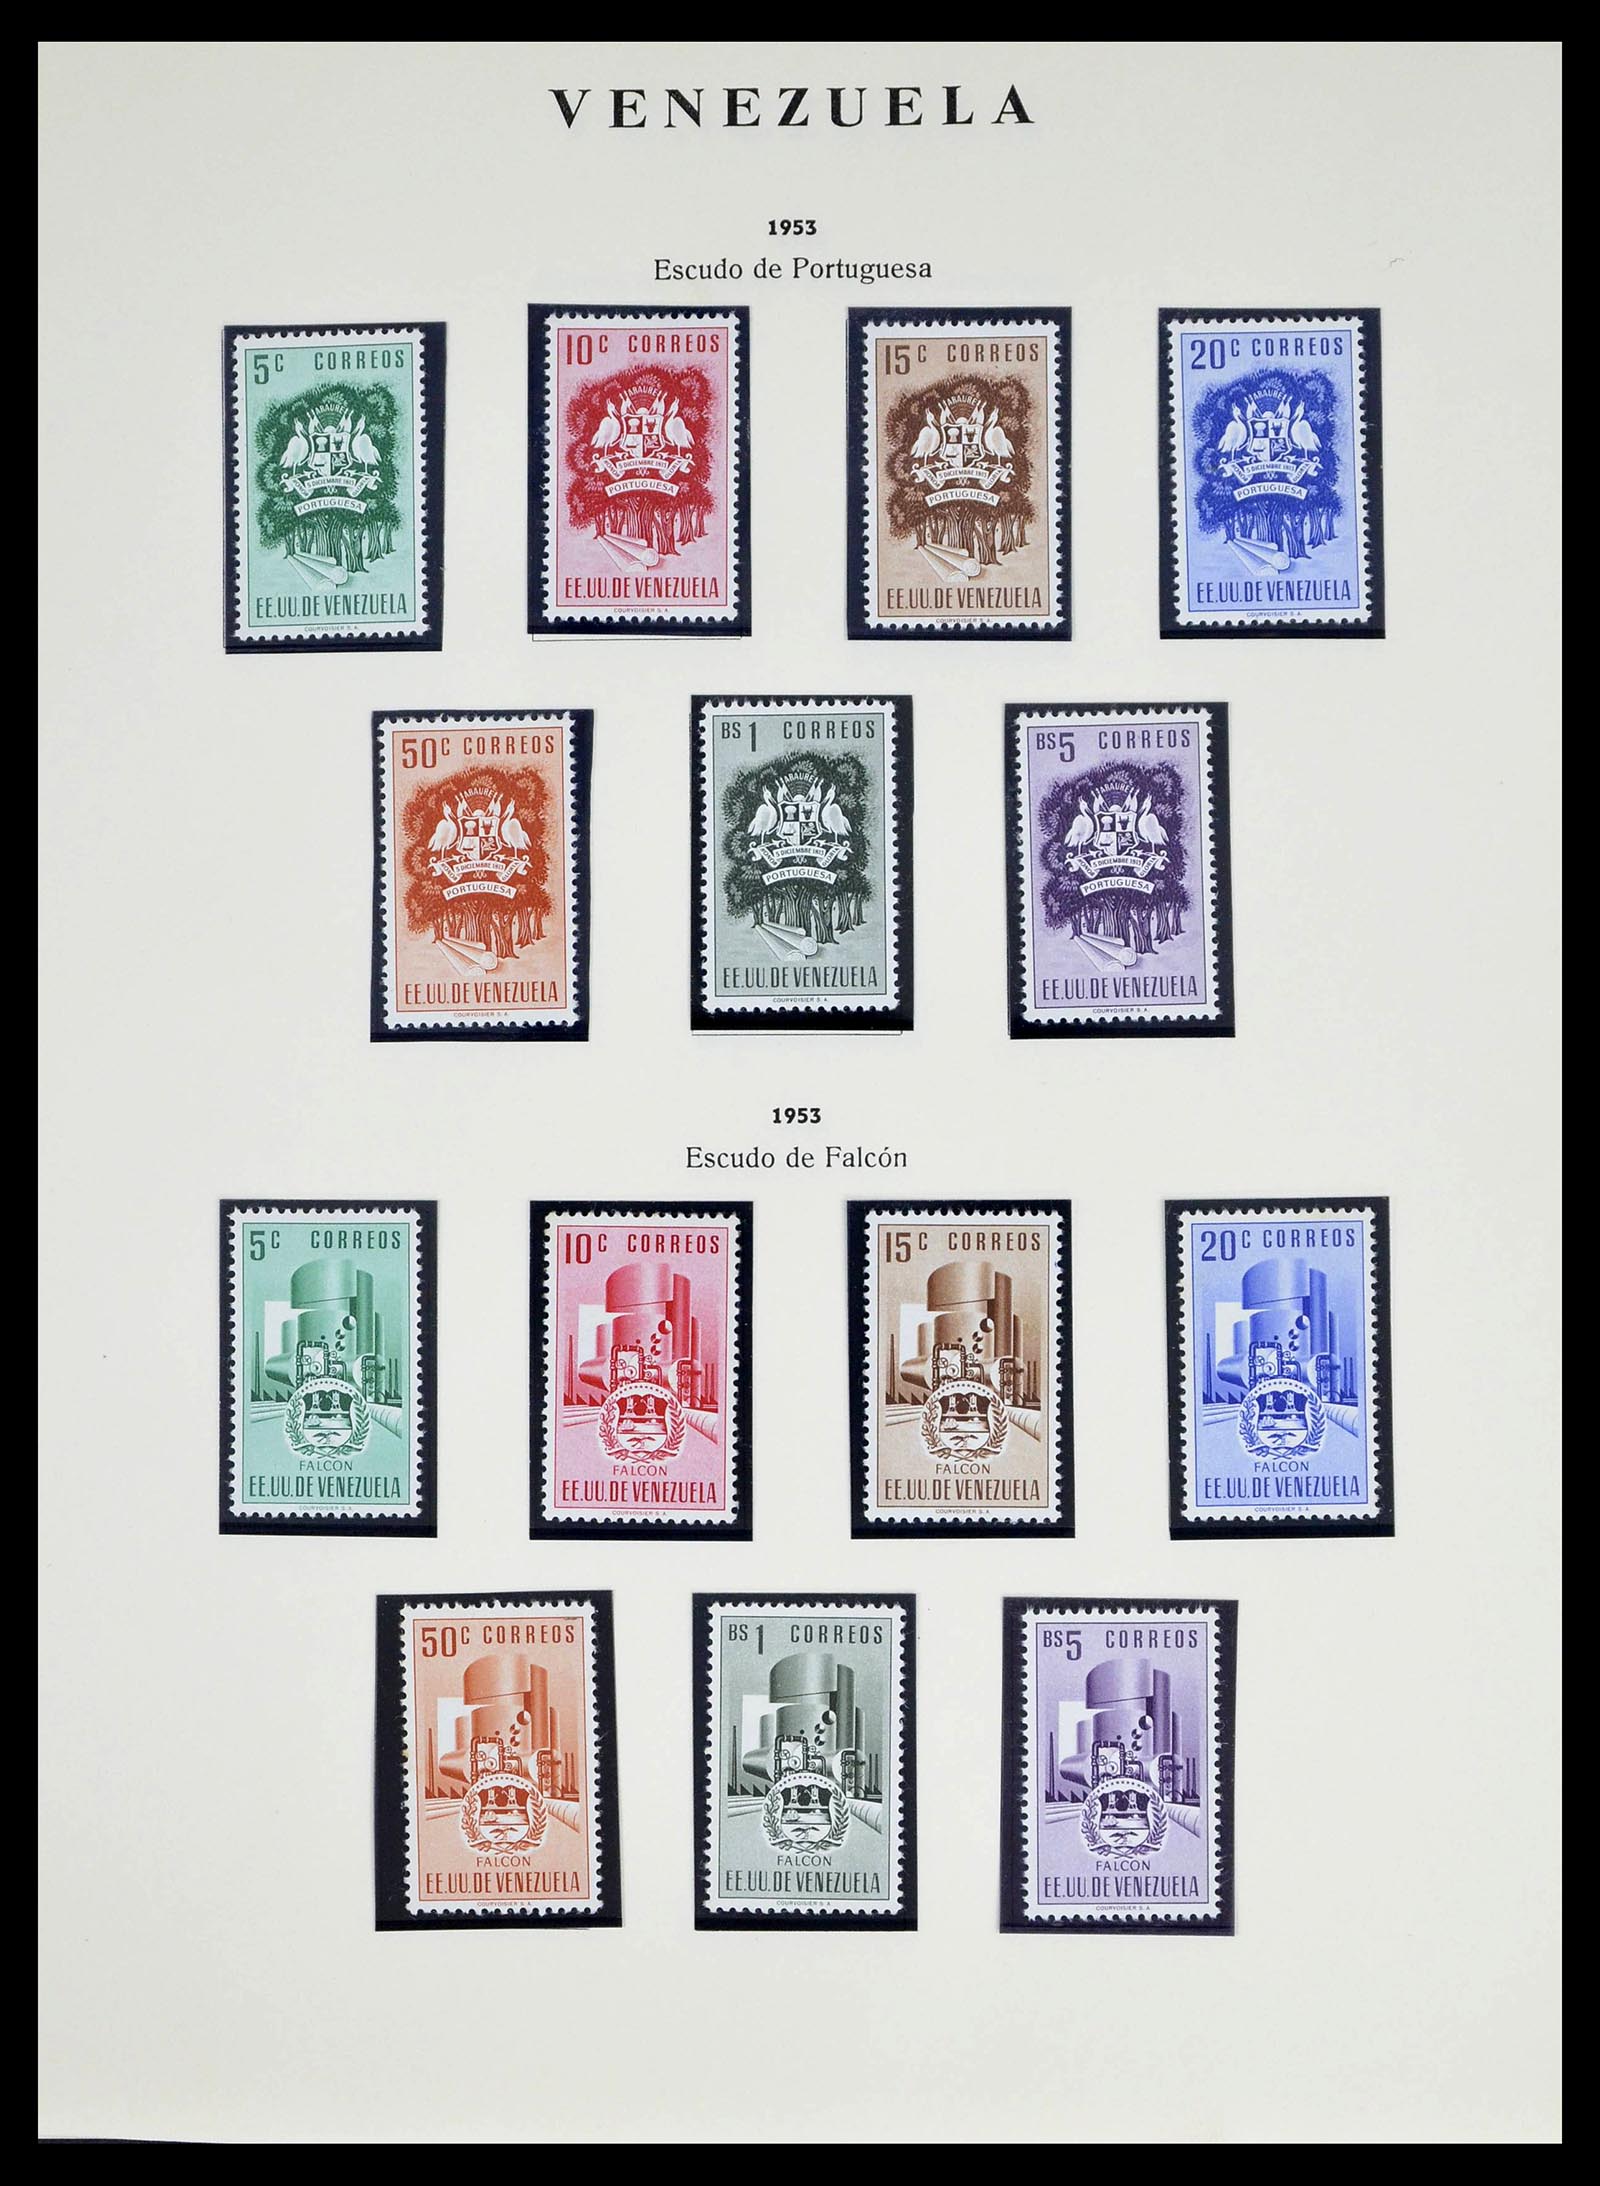 39223 0033 - Stamp collection 39223 Venezuela 1859-1984.